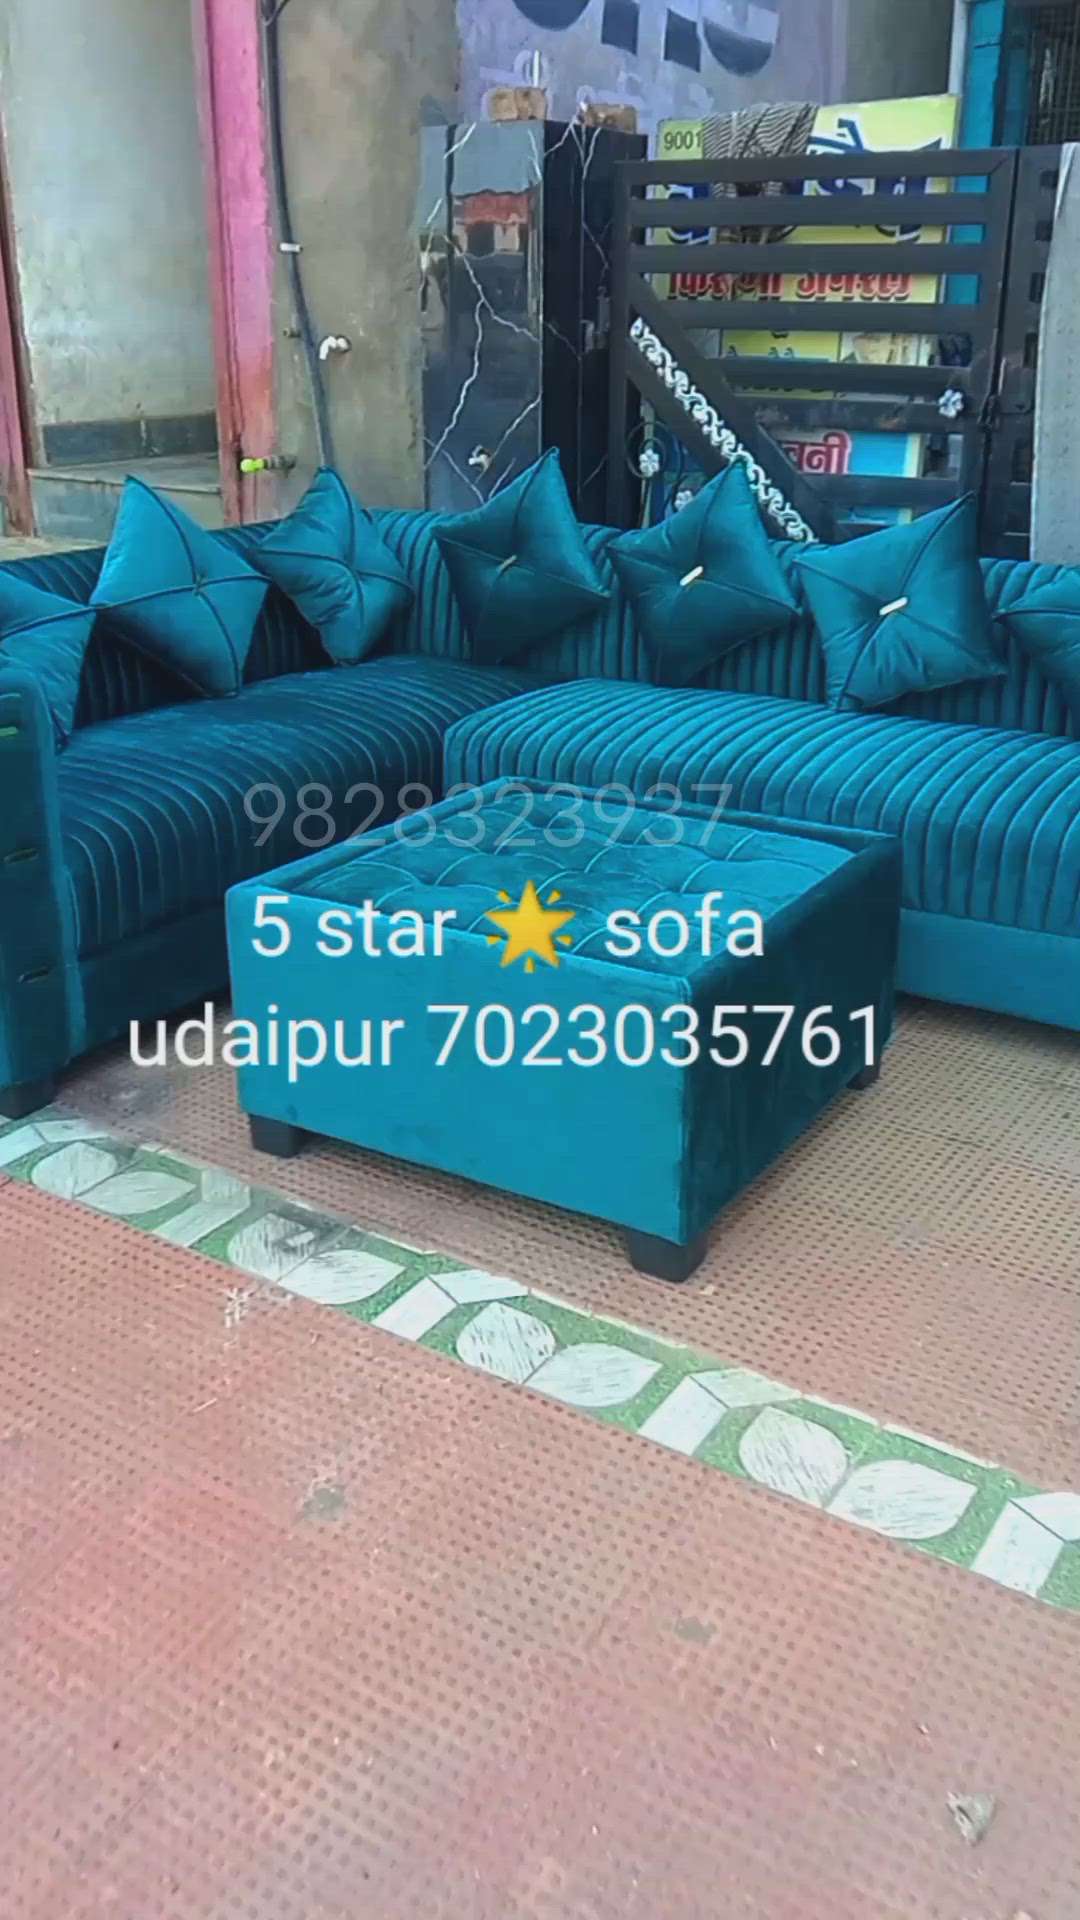 #Sofas #furniture